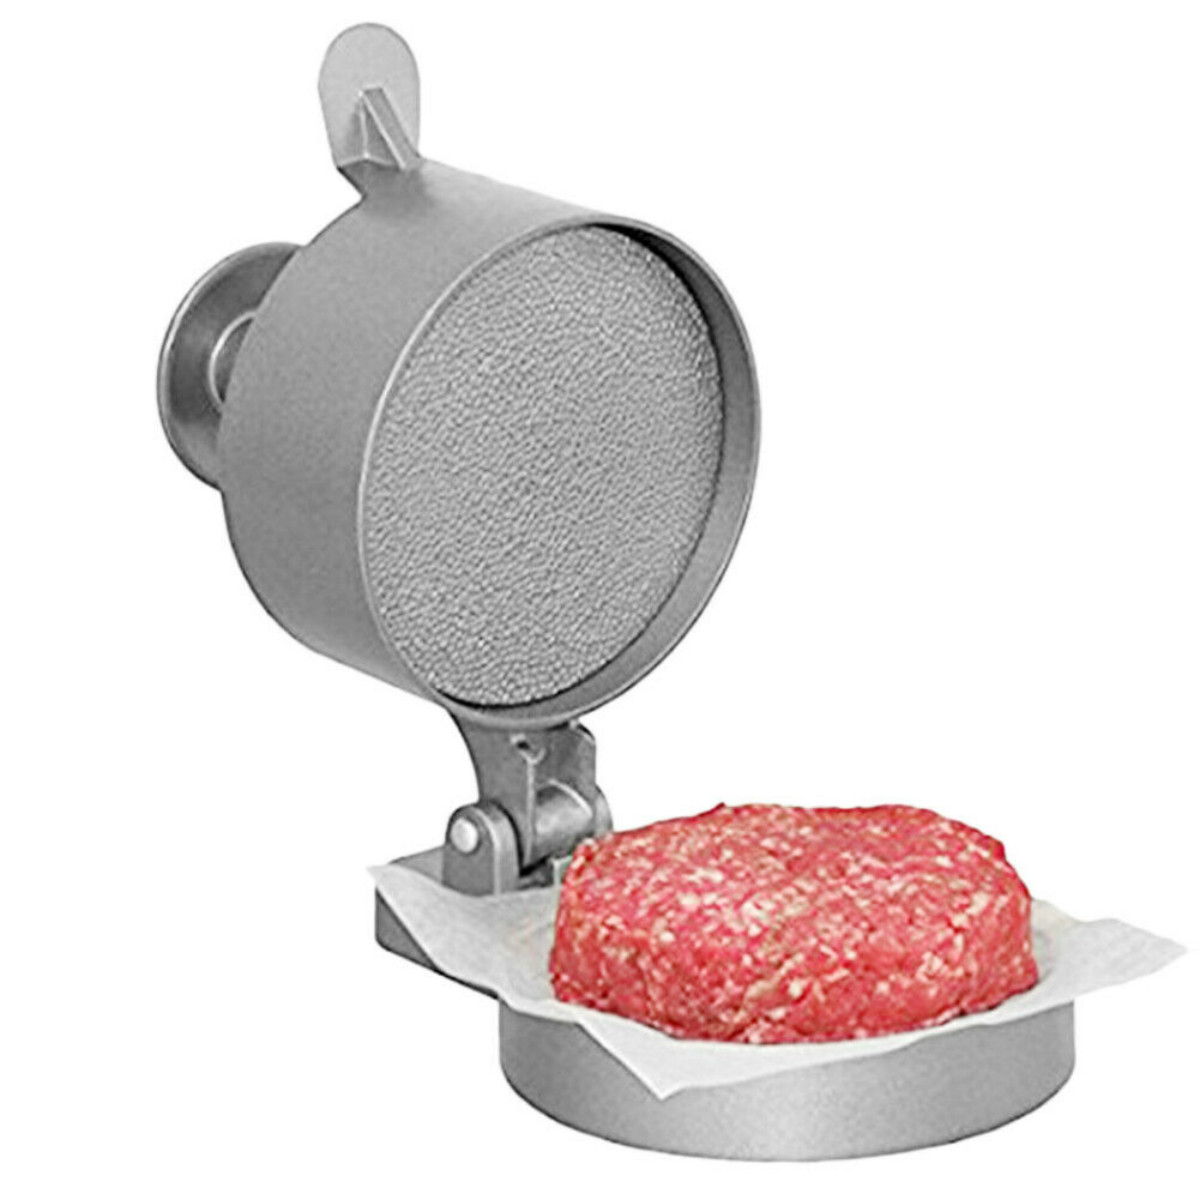 Burger-Press-Hamburger-Patty-Maker-Mold-Meat-Aluminum-Alloy-Non-Stick-Kitchen-1579049